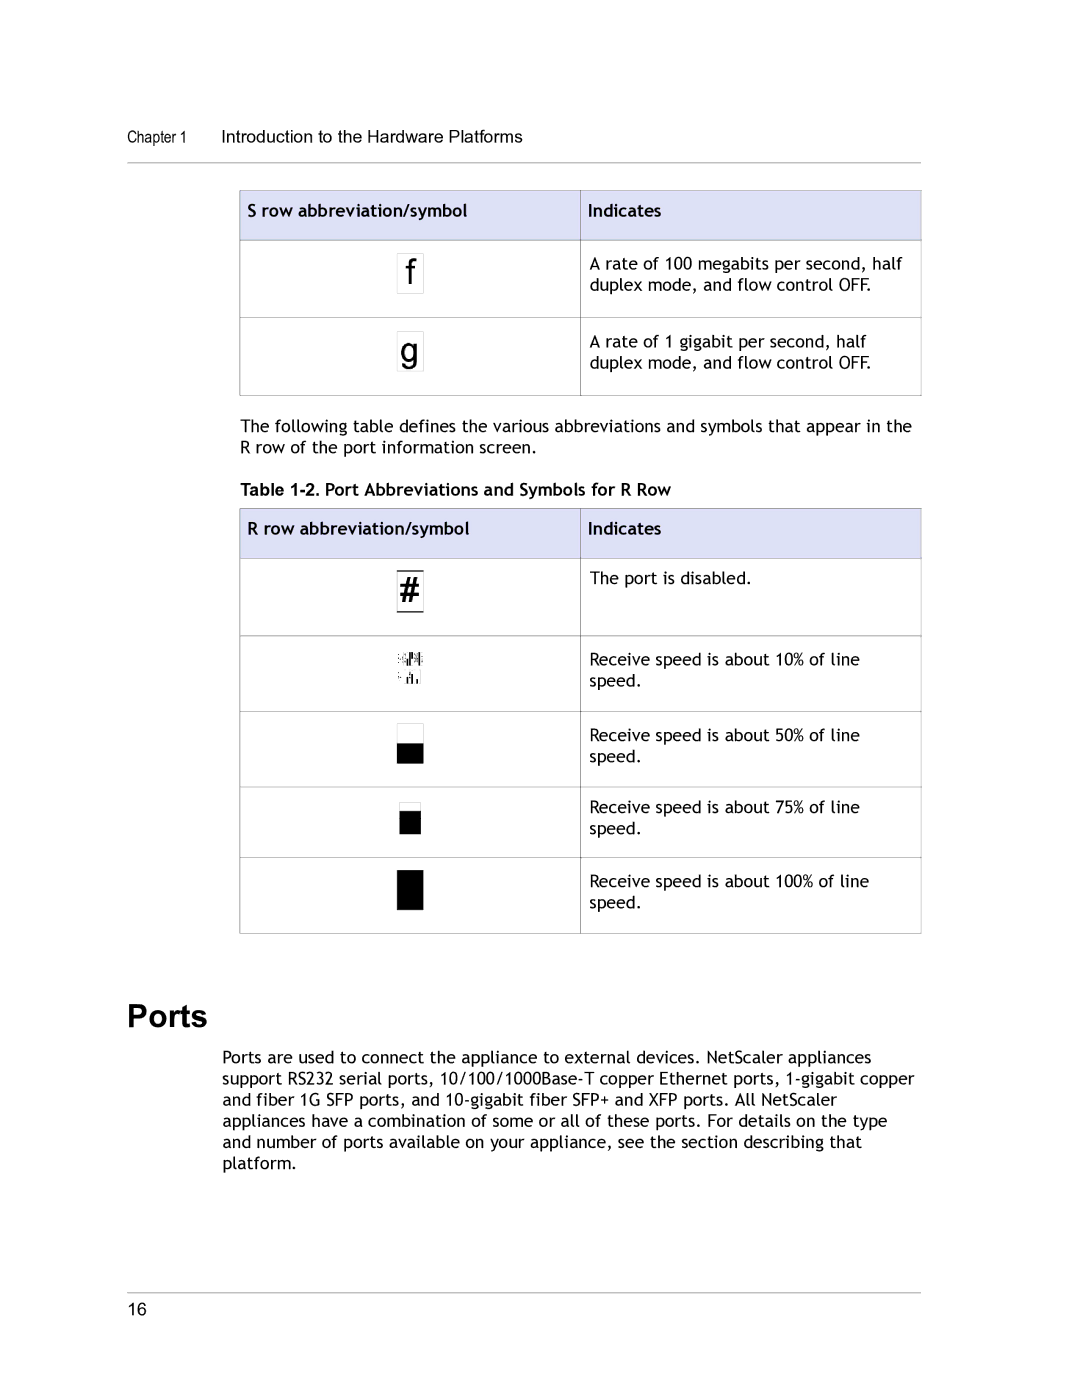 Citrix Systems 9.3 setup guide Ports, Row abbreviation/symbol Indicates 